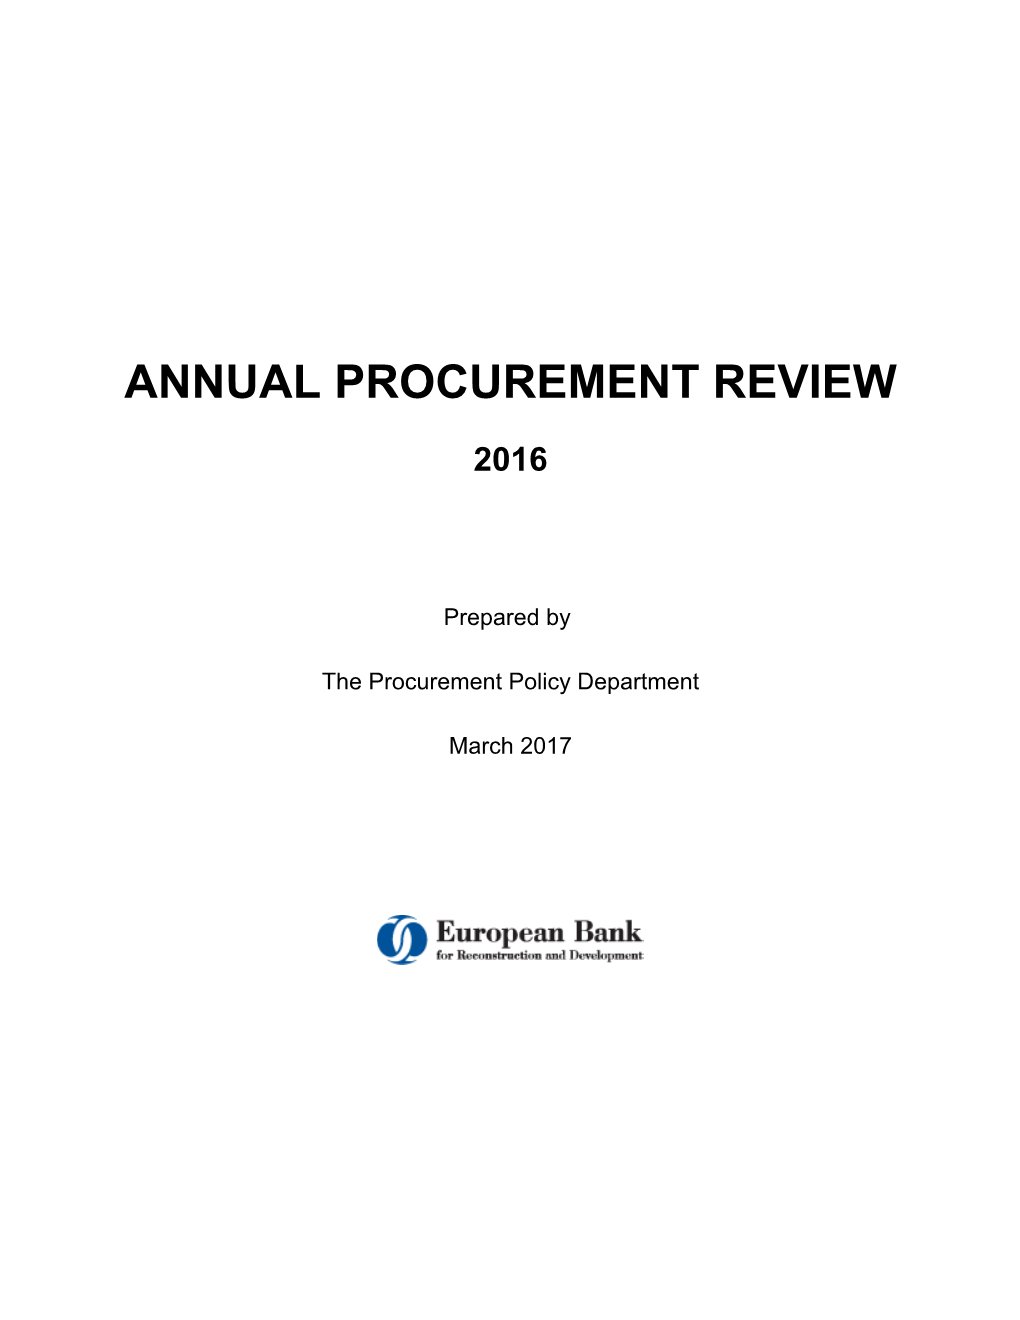 Annual Procurement Review